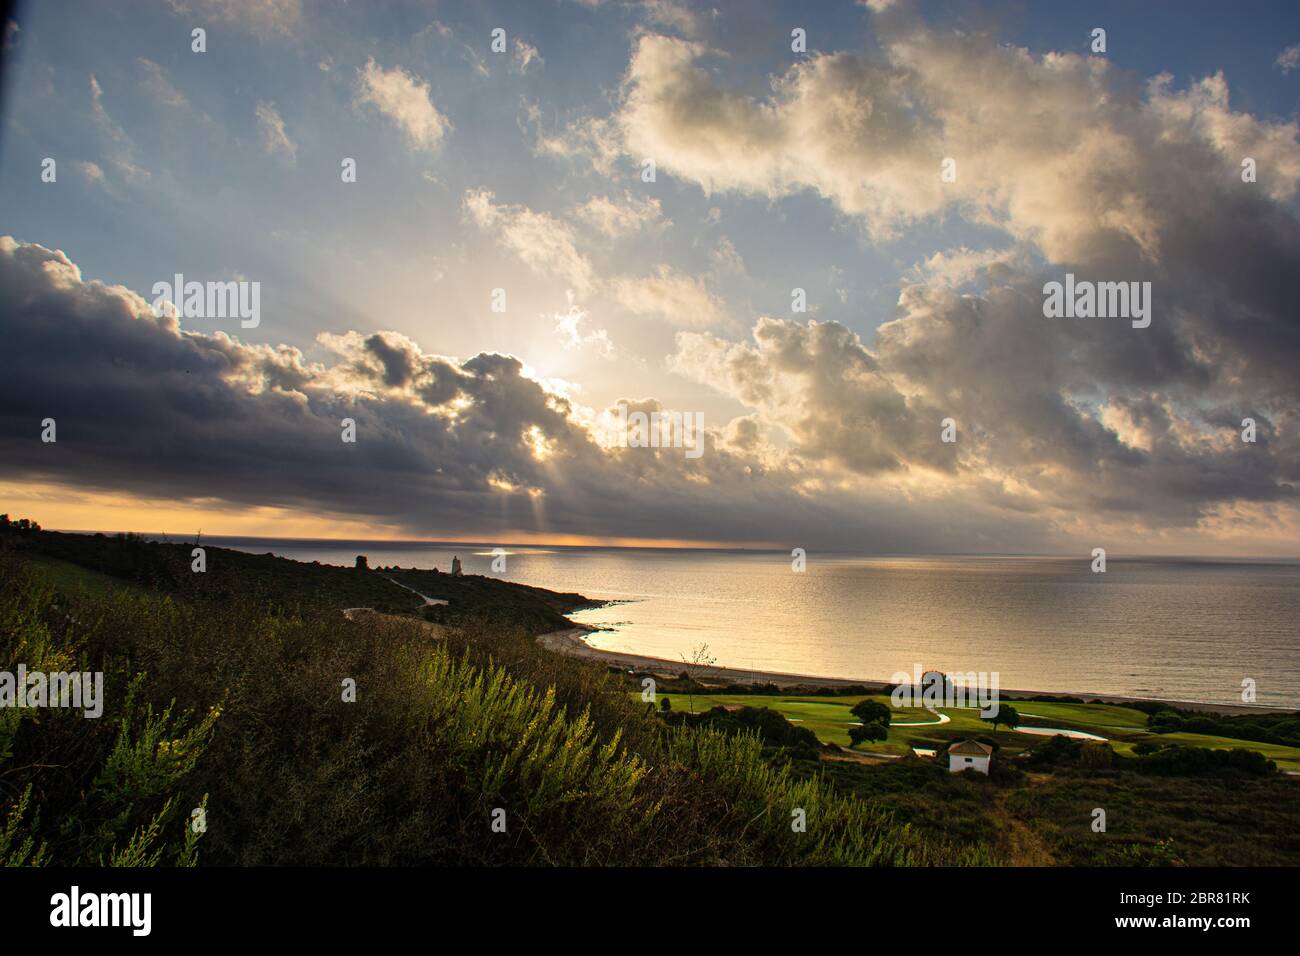 La Alcaidesa urbanization, Cadiz in Spain sunrise with a cloudy horizon and the mediterranean sea Stock Photo